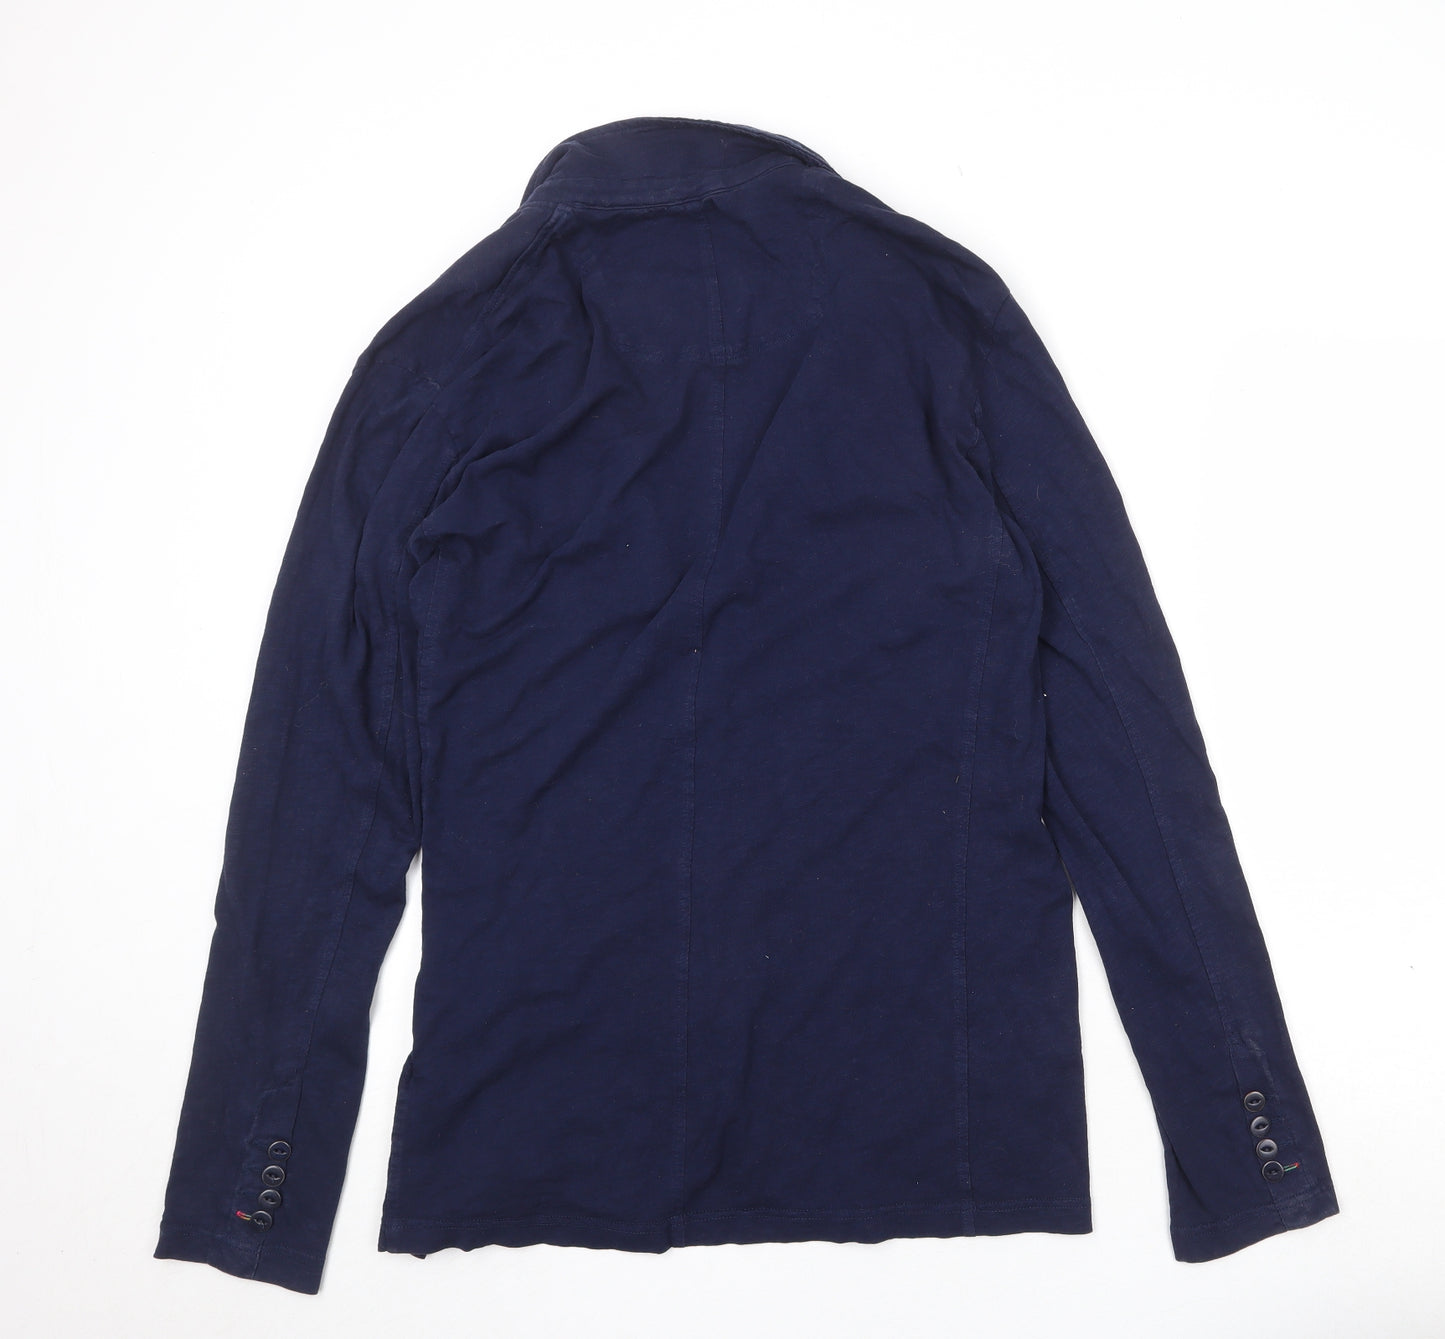 Esprit Womens Blue Jacket Size XL Button